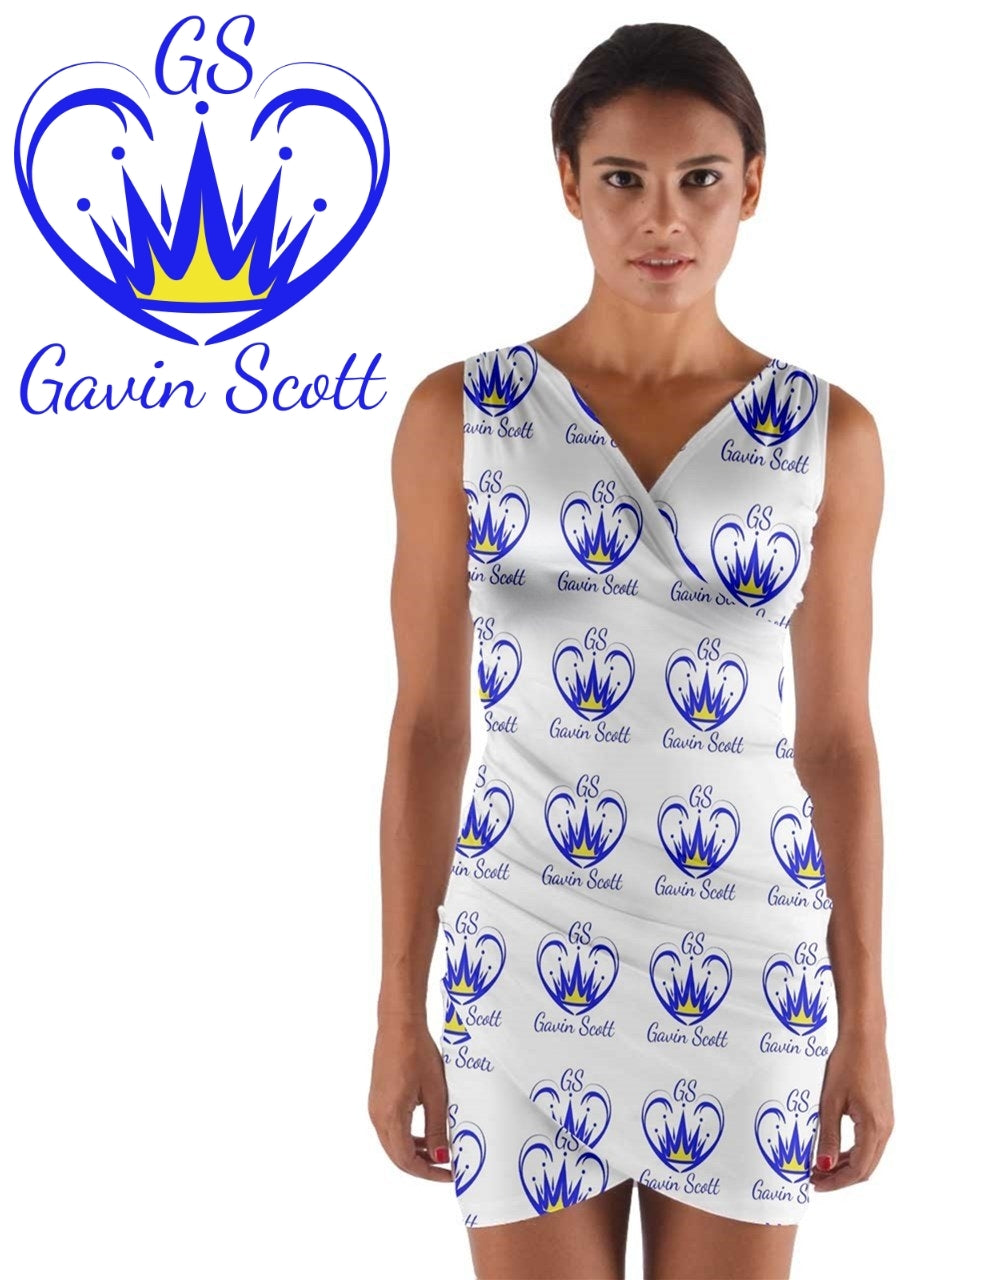 Gavin Scott Wrap Front ICONIC Bodycon Dress (Femme XS-3XL)